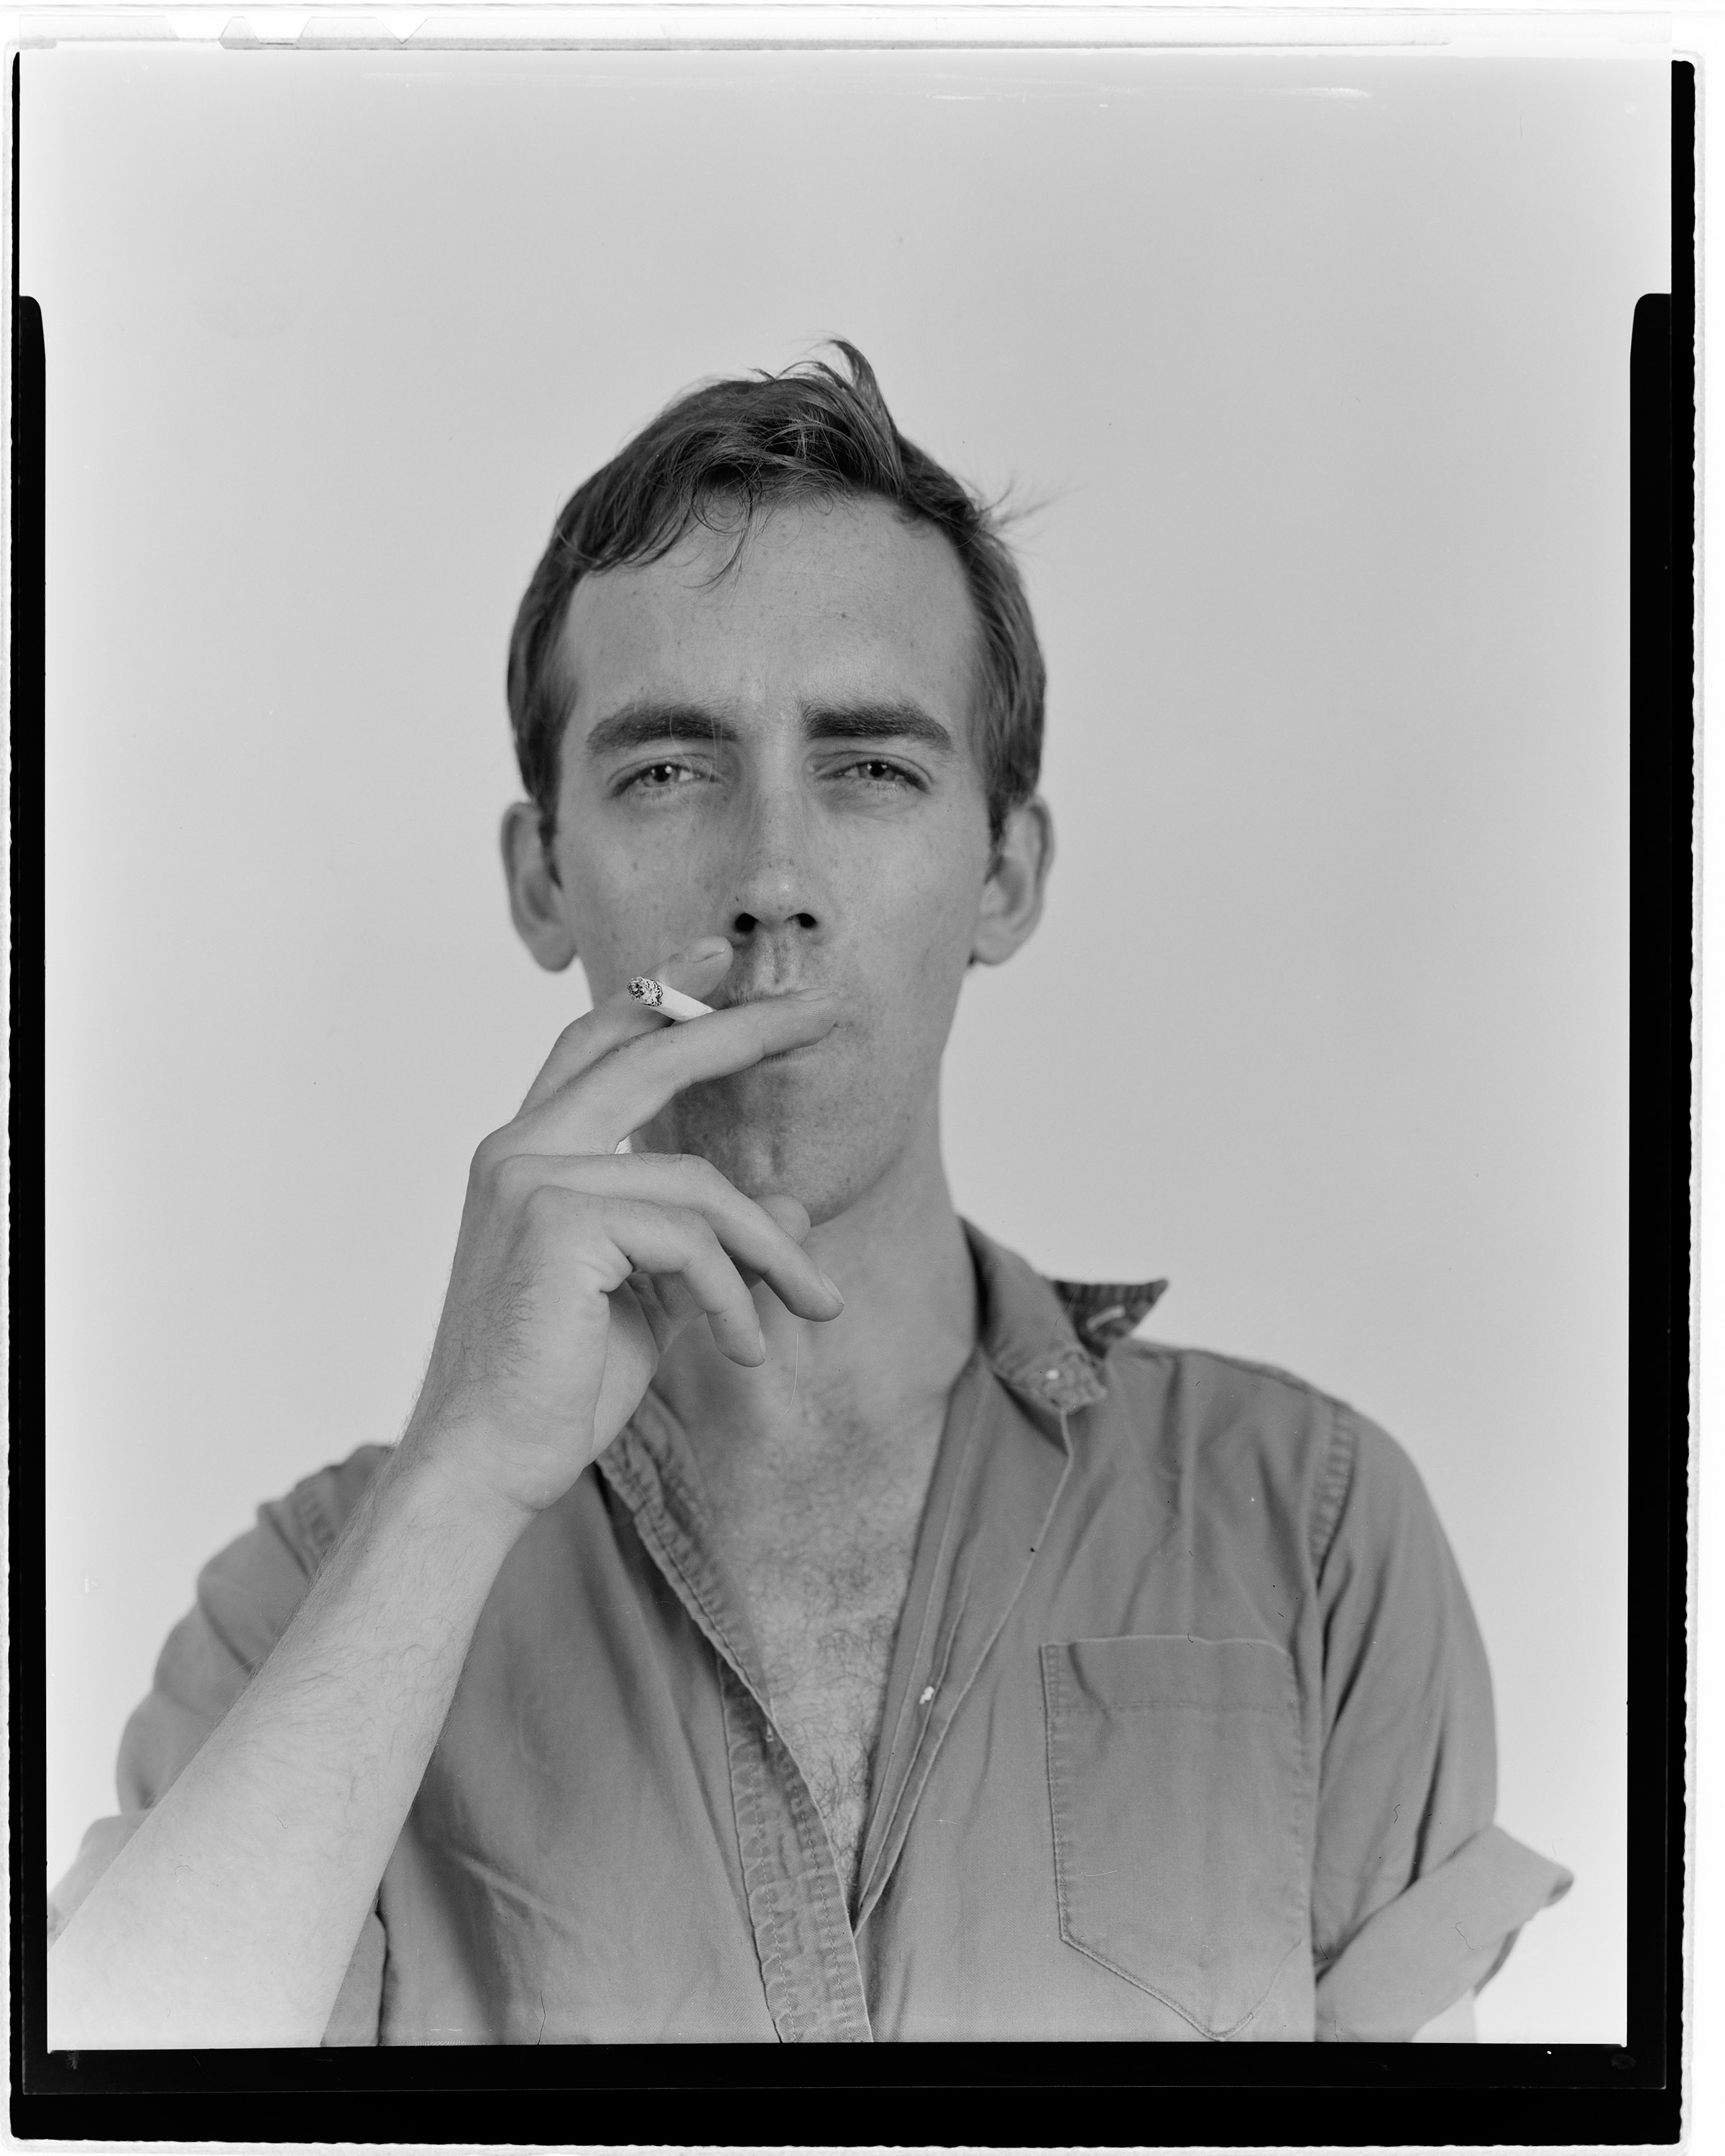 a black and white portrait of David Wojnarowicz smoking a cigarette in 1983 by tom warren